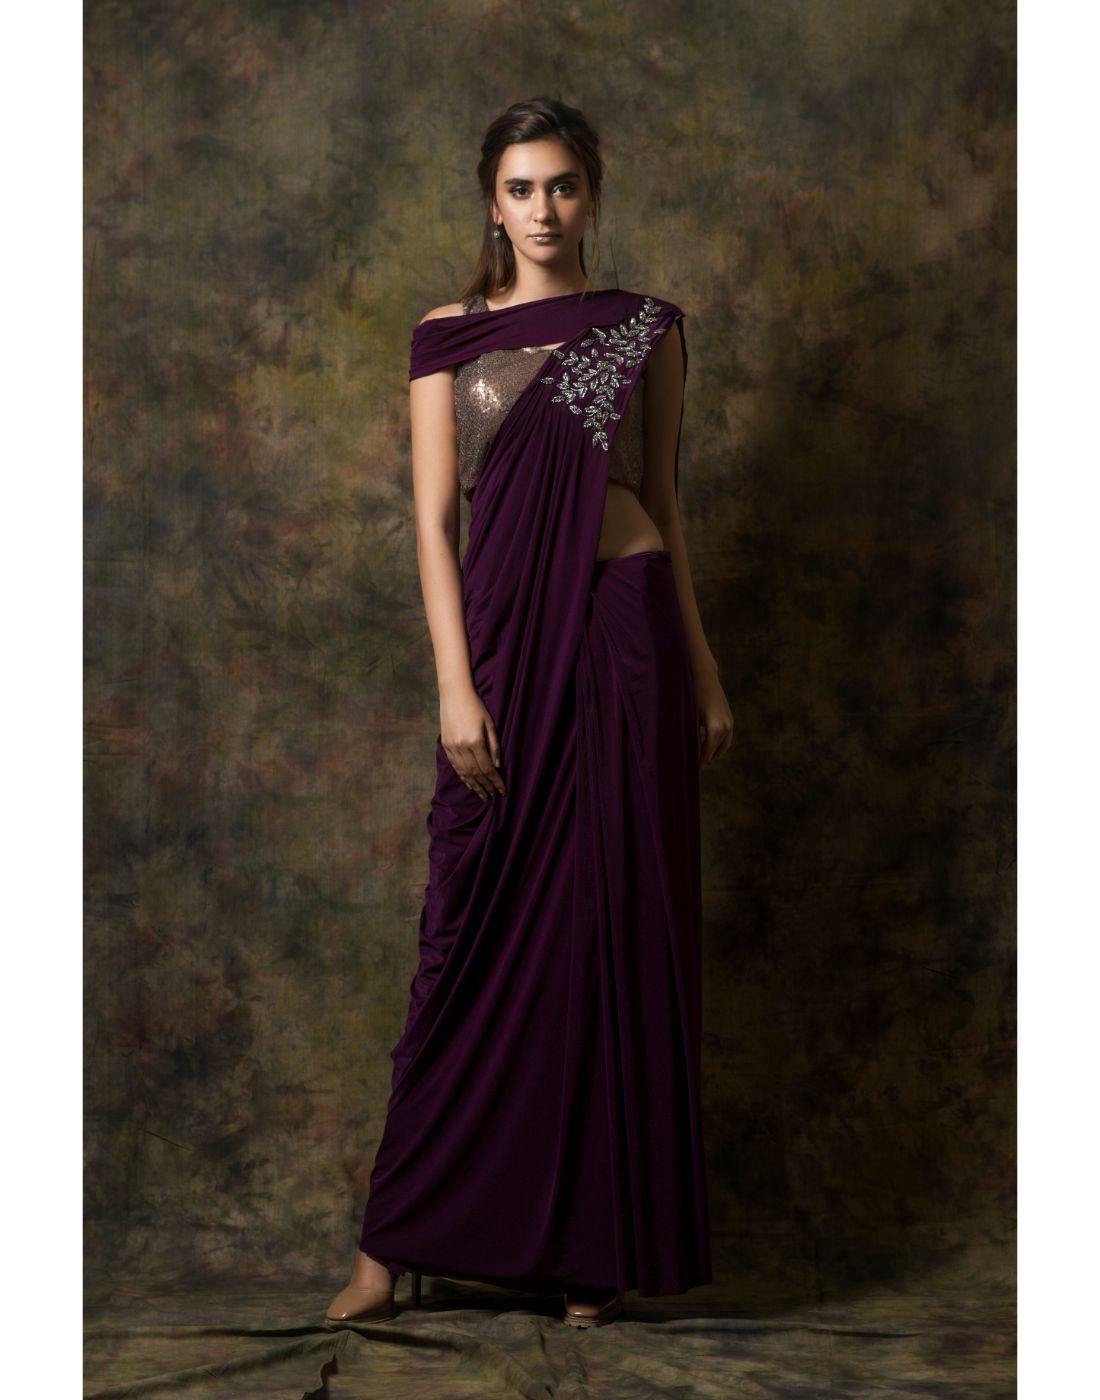 Hand Print Cotton Saree For Women Wedding Beautiful Party Wear Dress Sari  Blouse | eBay